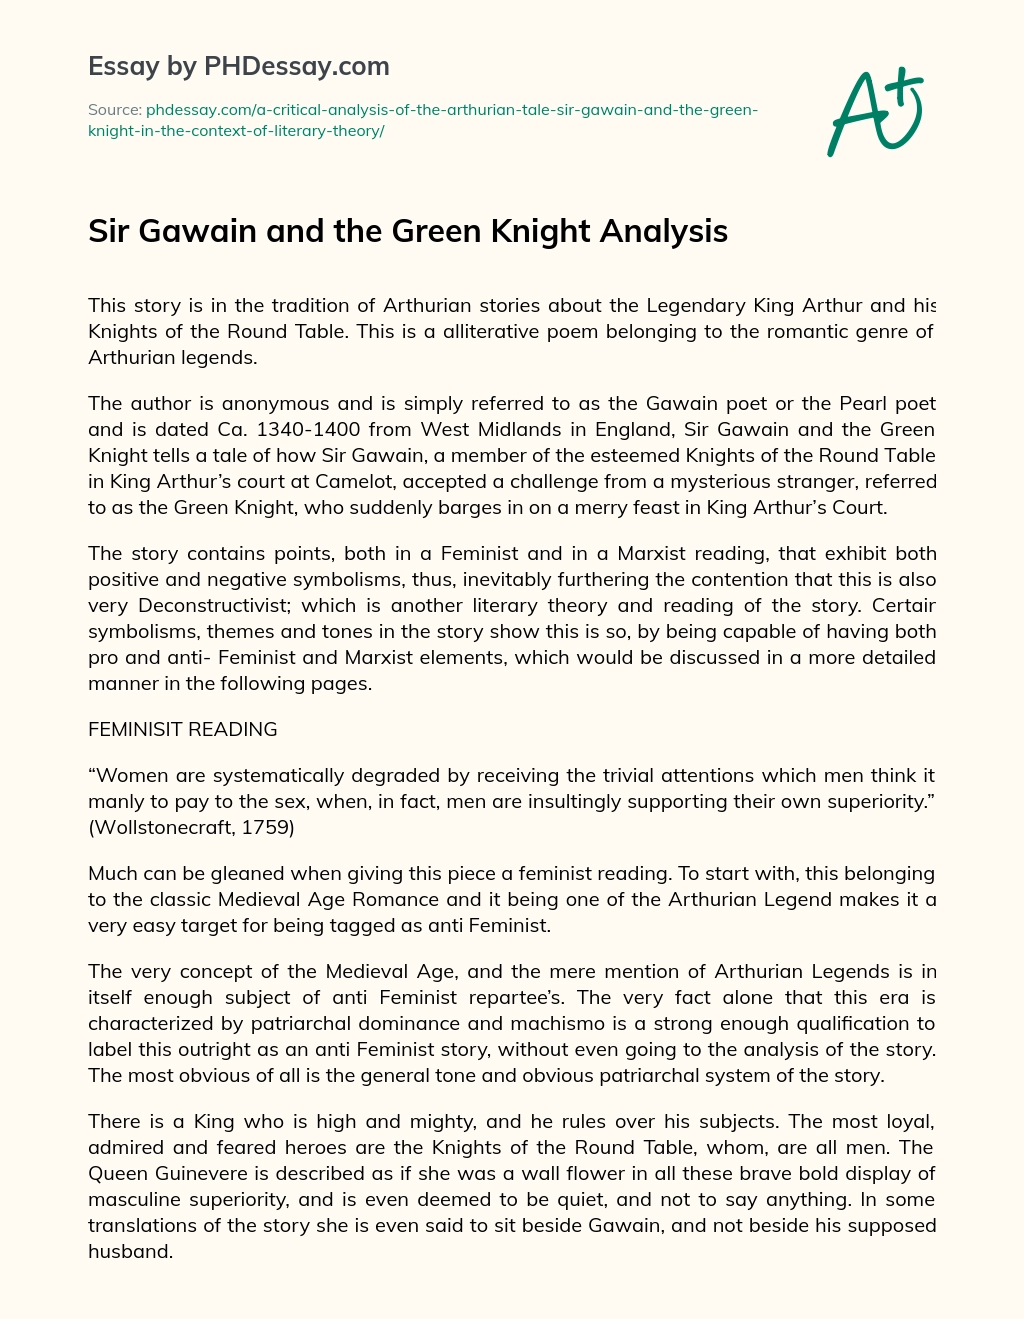 Sir Gawain and the Green Knight Analysis essay